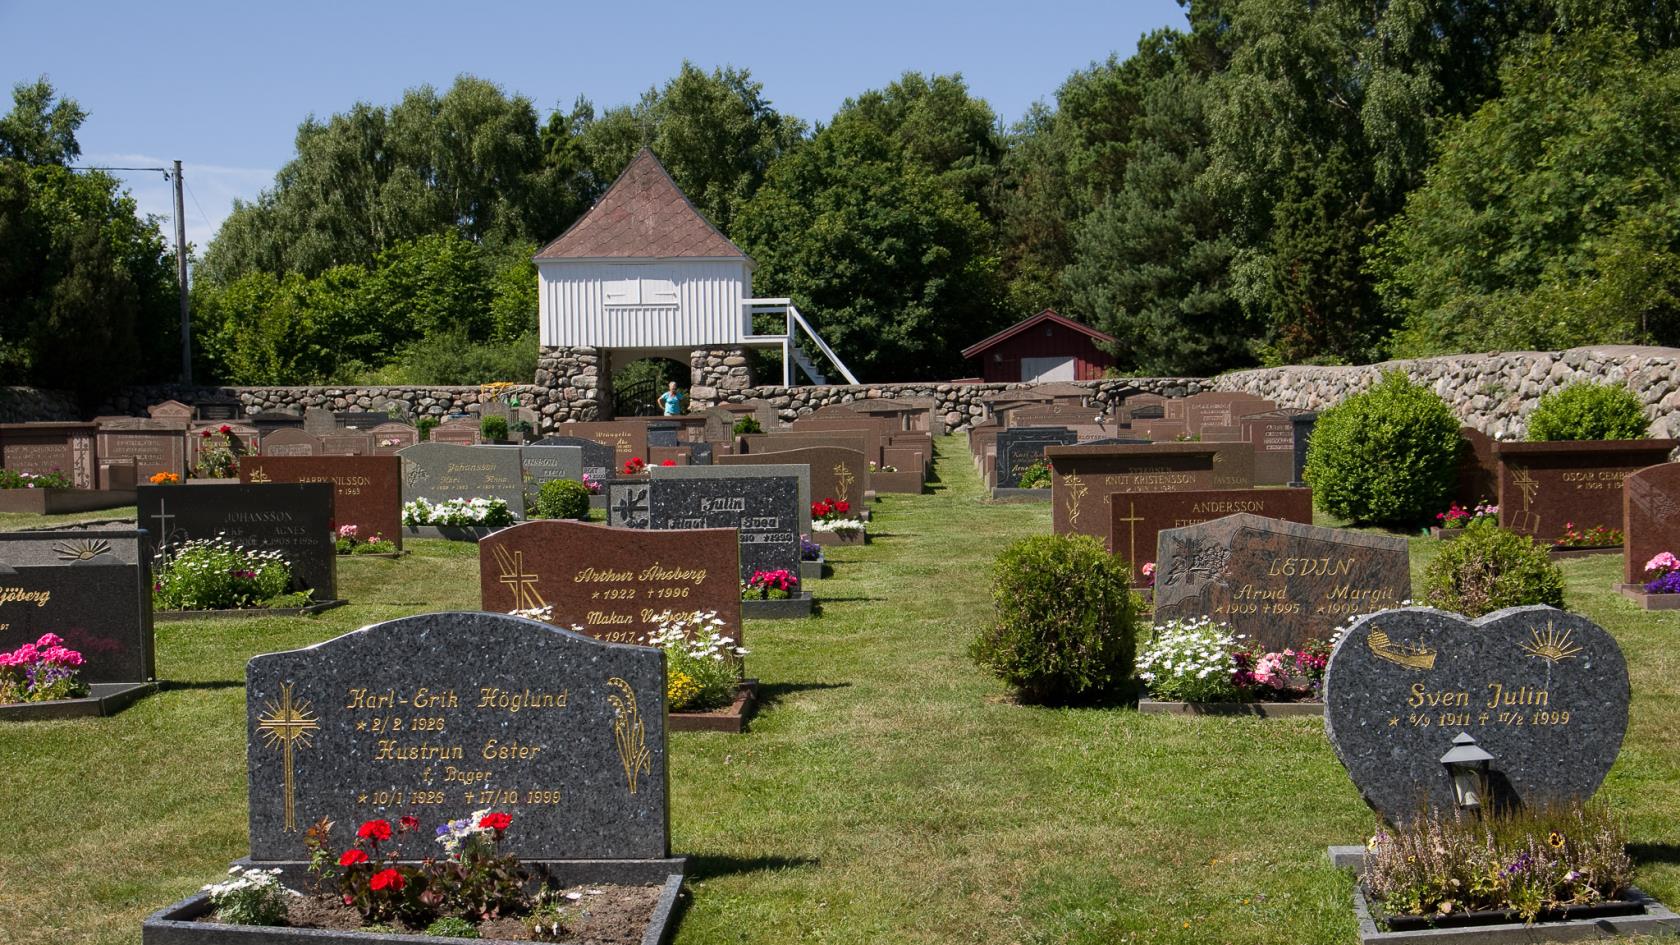 Gravar på Vrångö kyrkogård